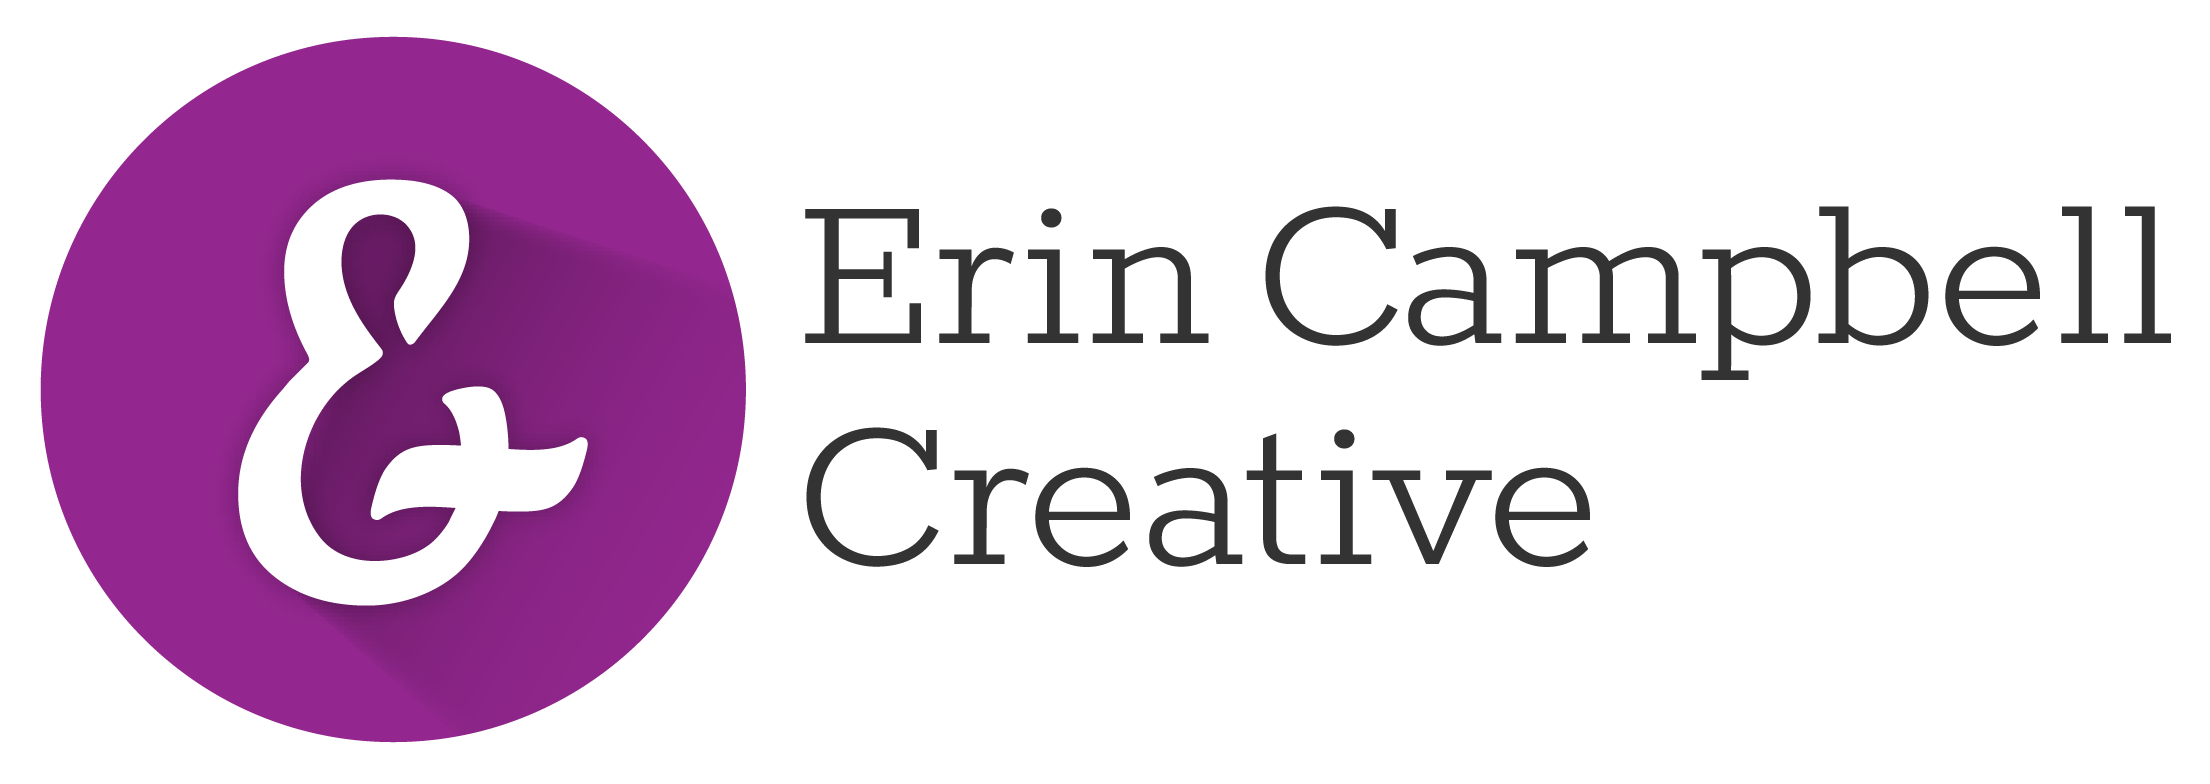 Erin Campbell Creative